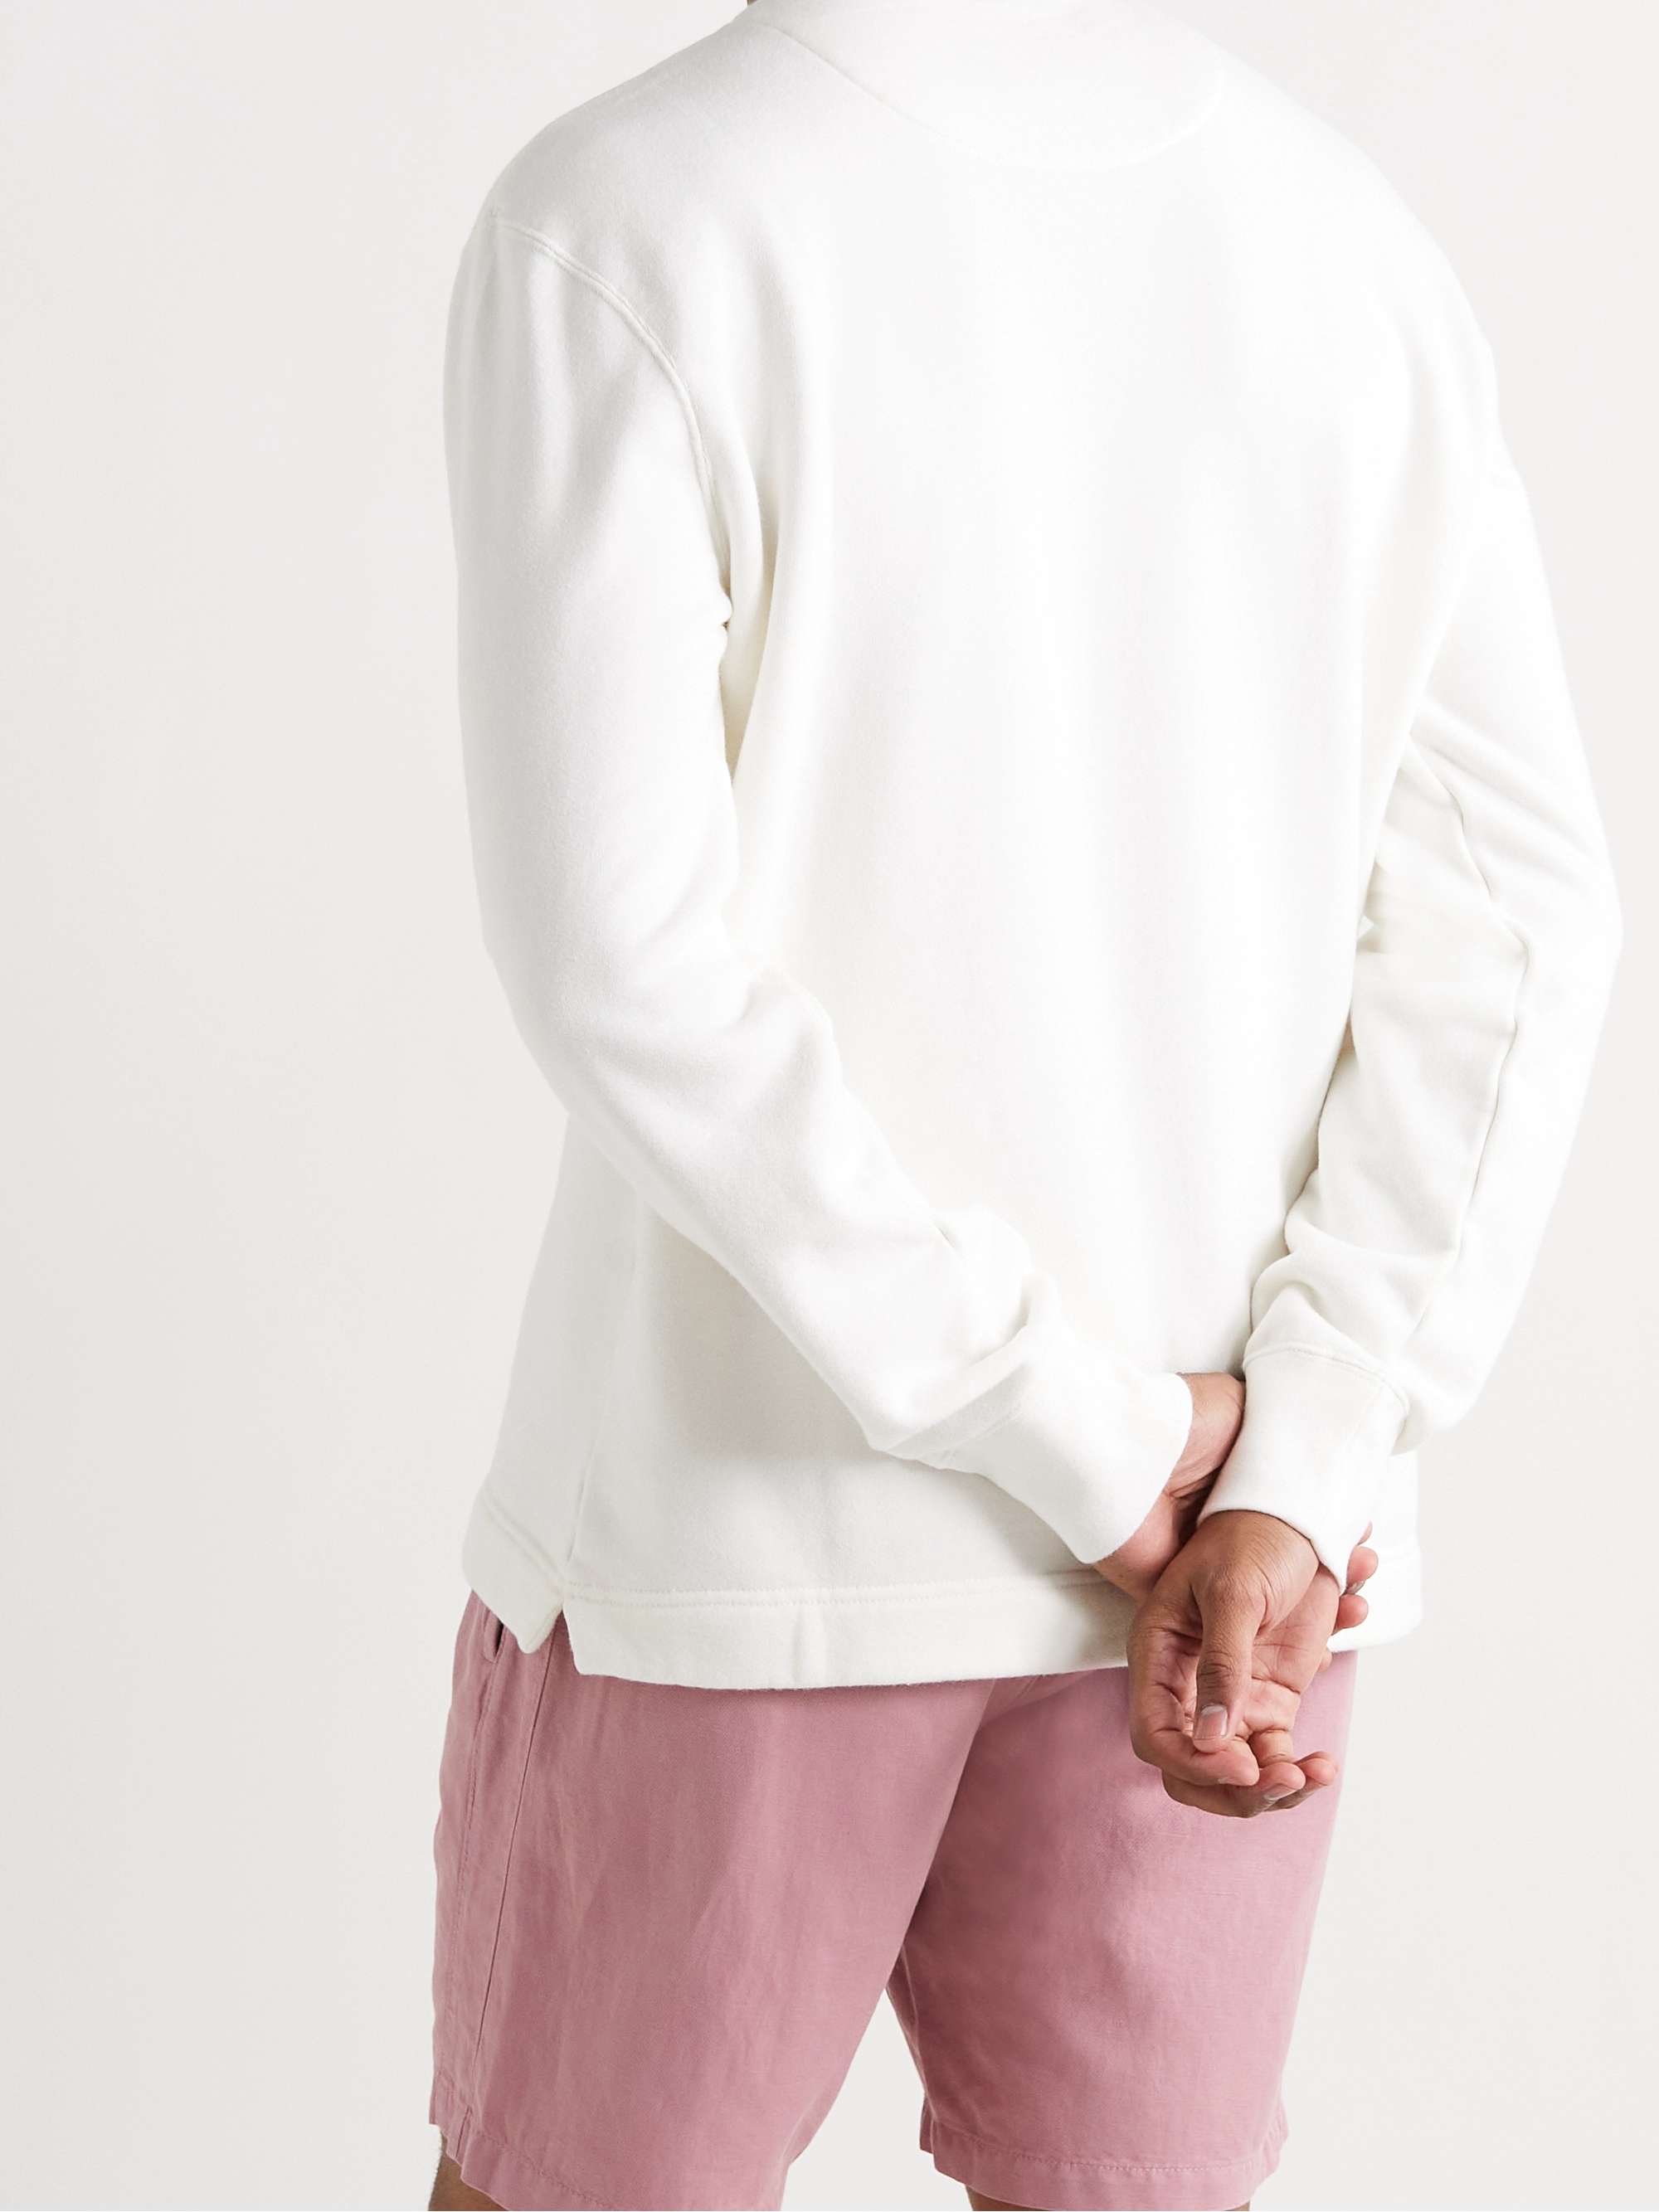 MR P. Japanese Organic Cotton-Jersey Sweatshirt